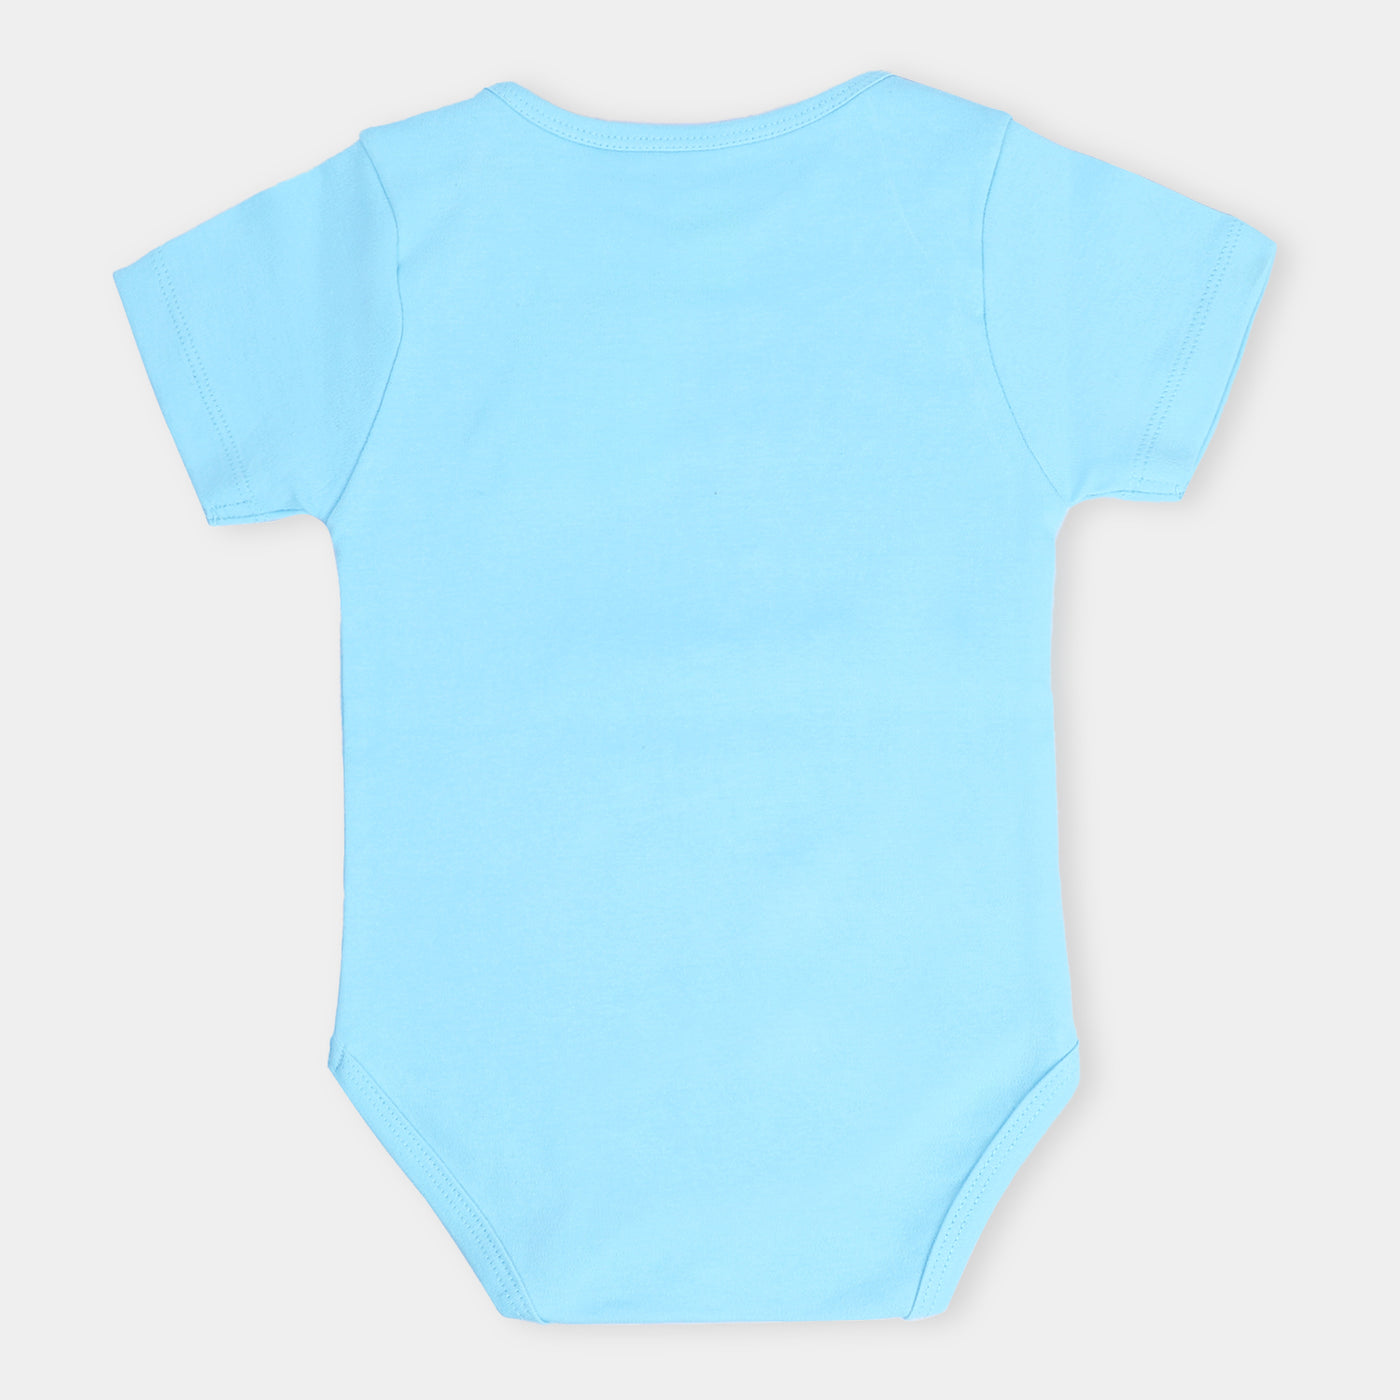 Infant Cotton Interlock Romper Mickey-Blue